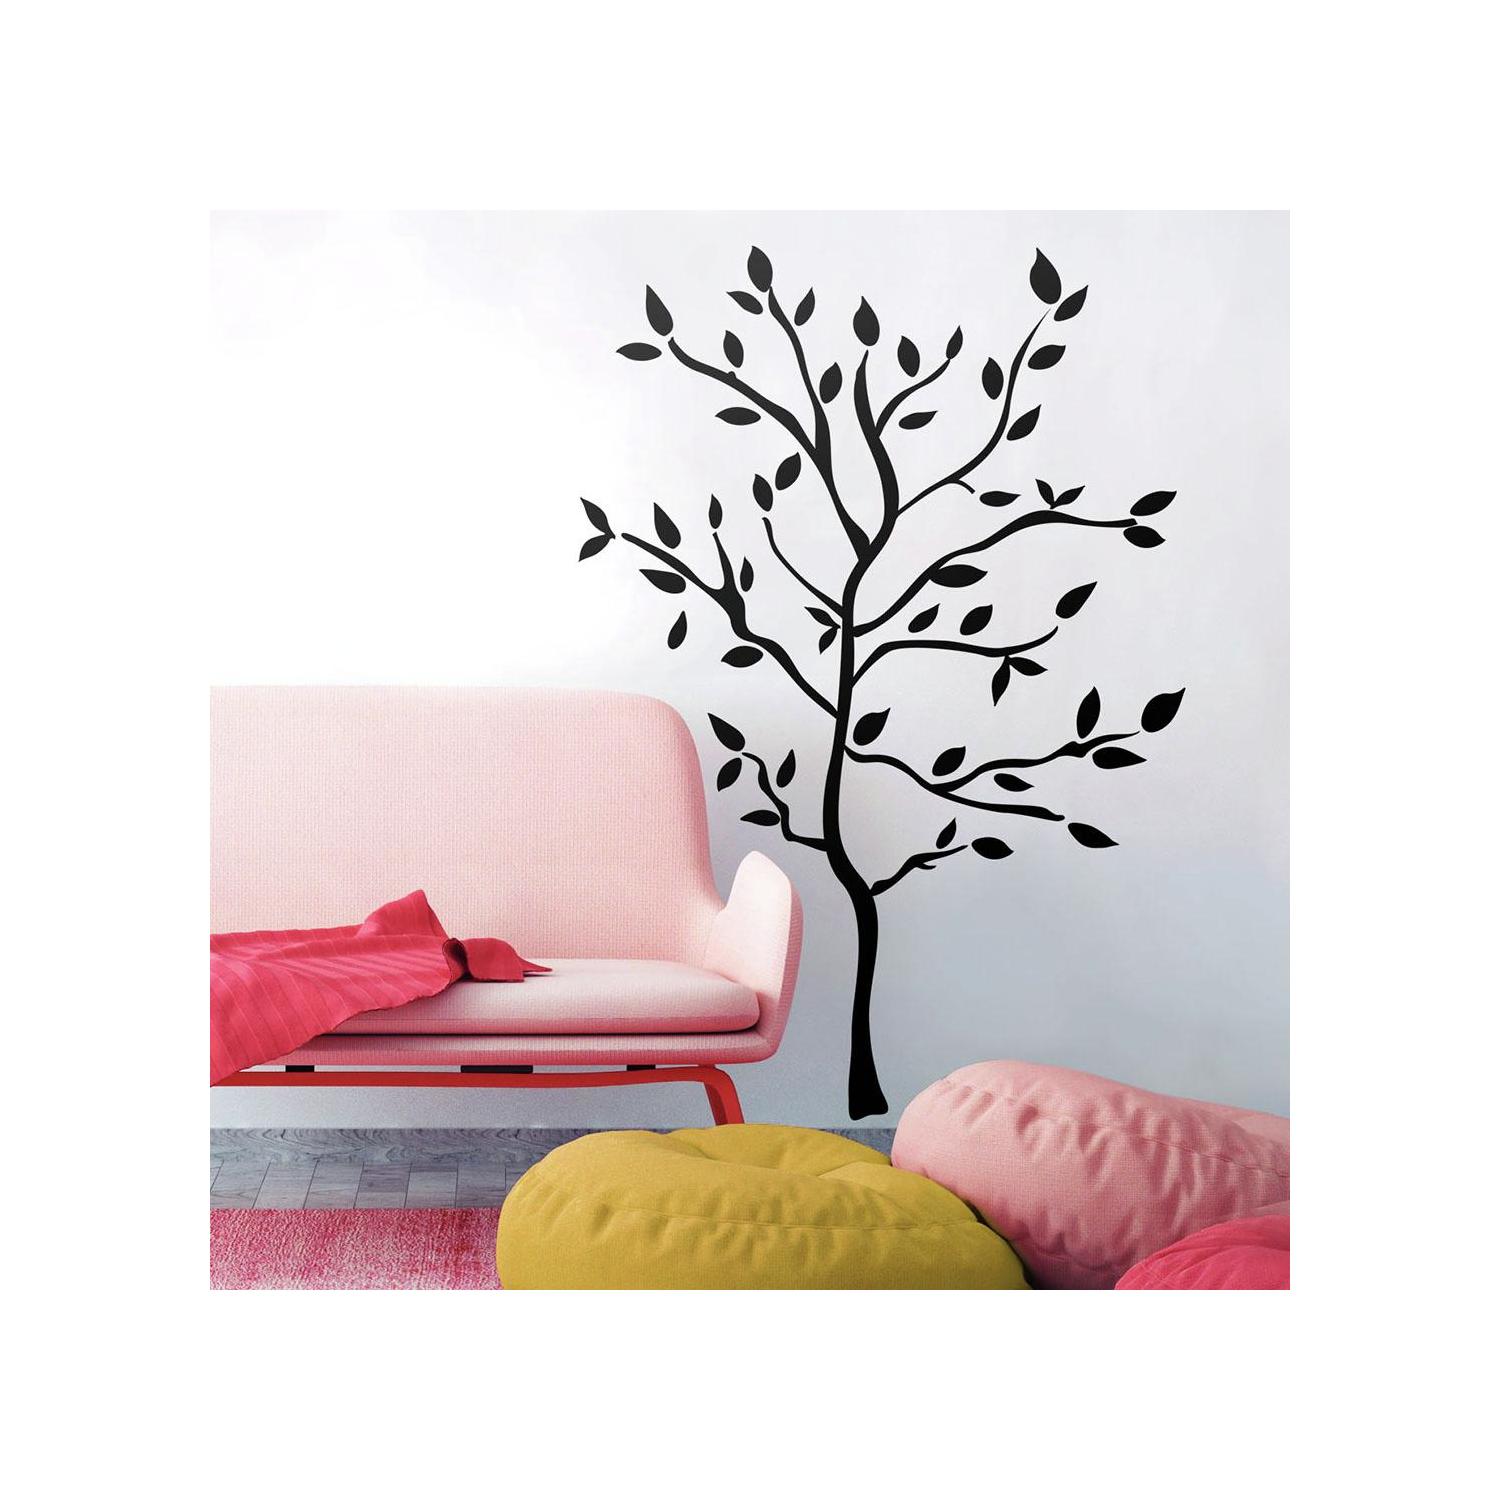 Samolepky Černý strom Samolepky na zeď nálepky - samolepka Strom černý,samolepící dekorace,obrázky stromů aplikace RoomMates (117,5 cm x 155 cm)